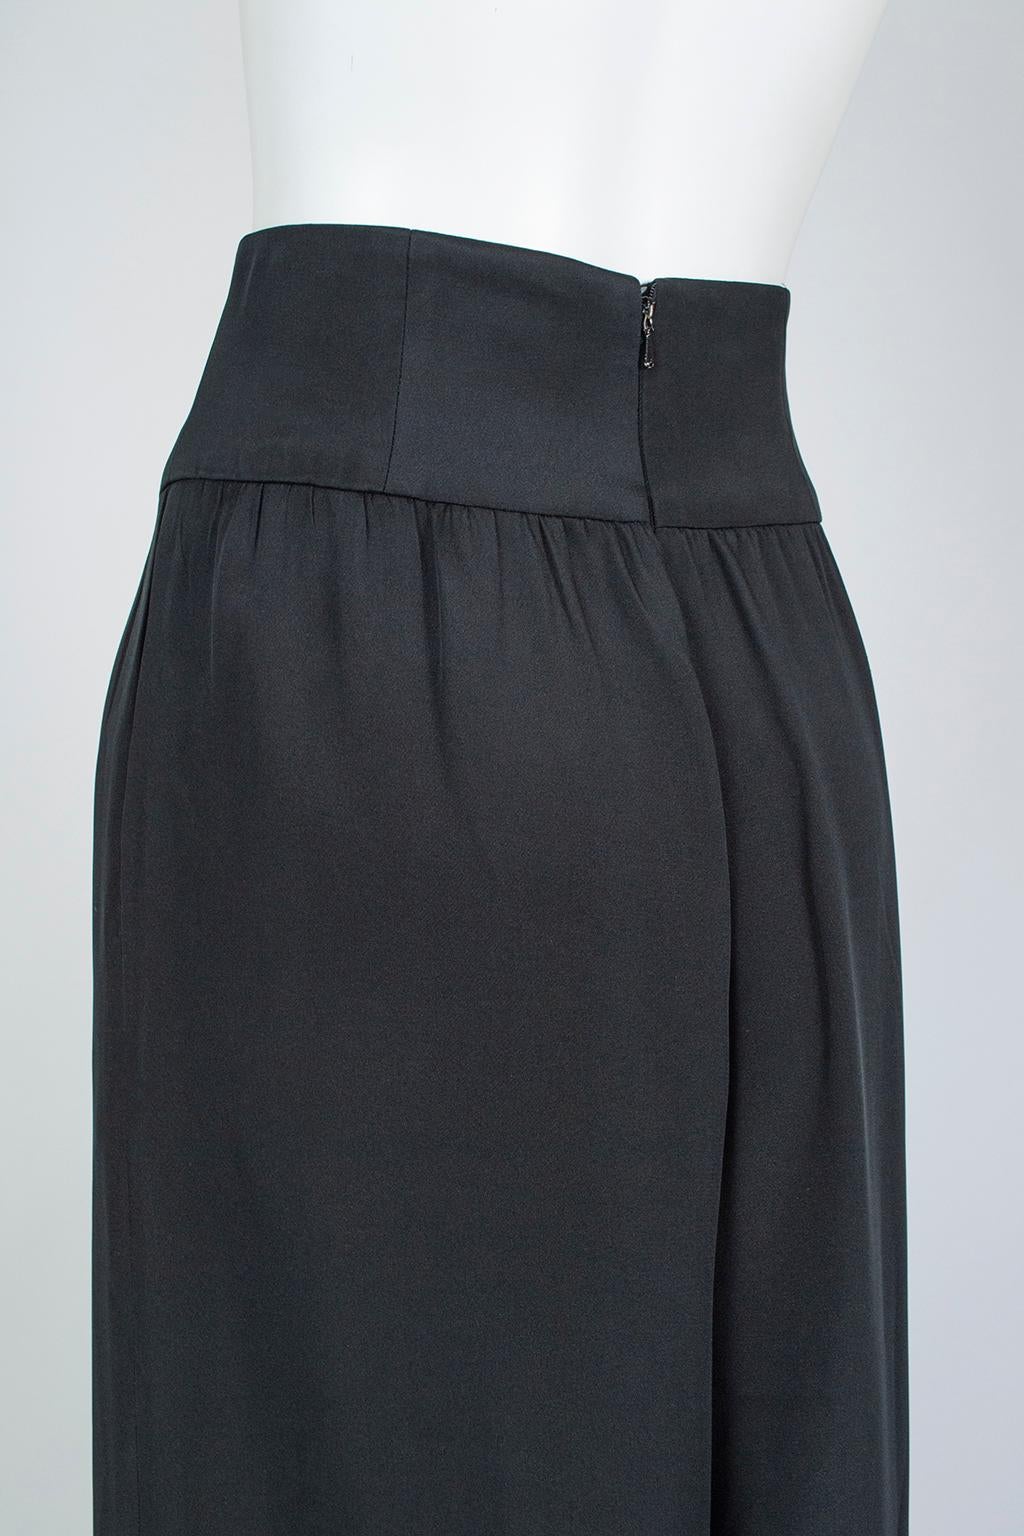 Black Silk Wide Leg Culottes with Cummerbund Girdle Waist – Medium, 1980s 3